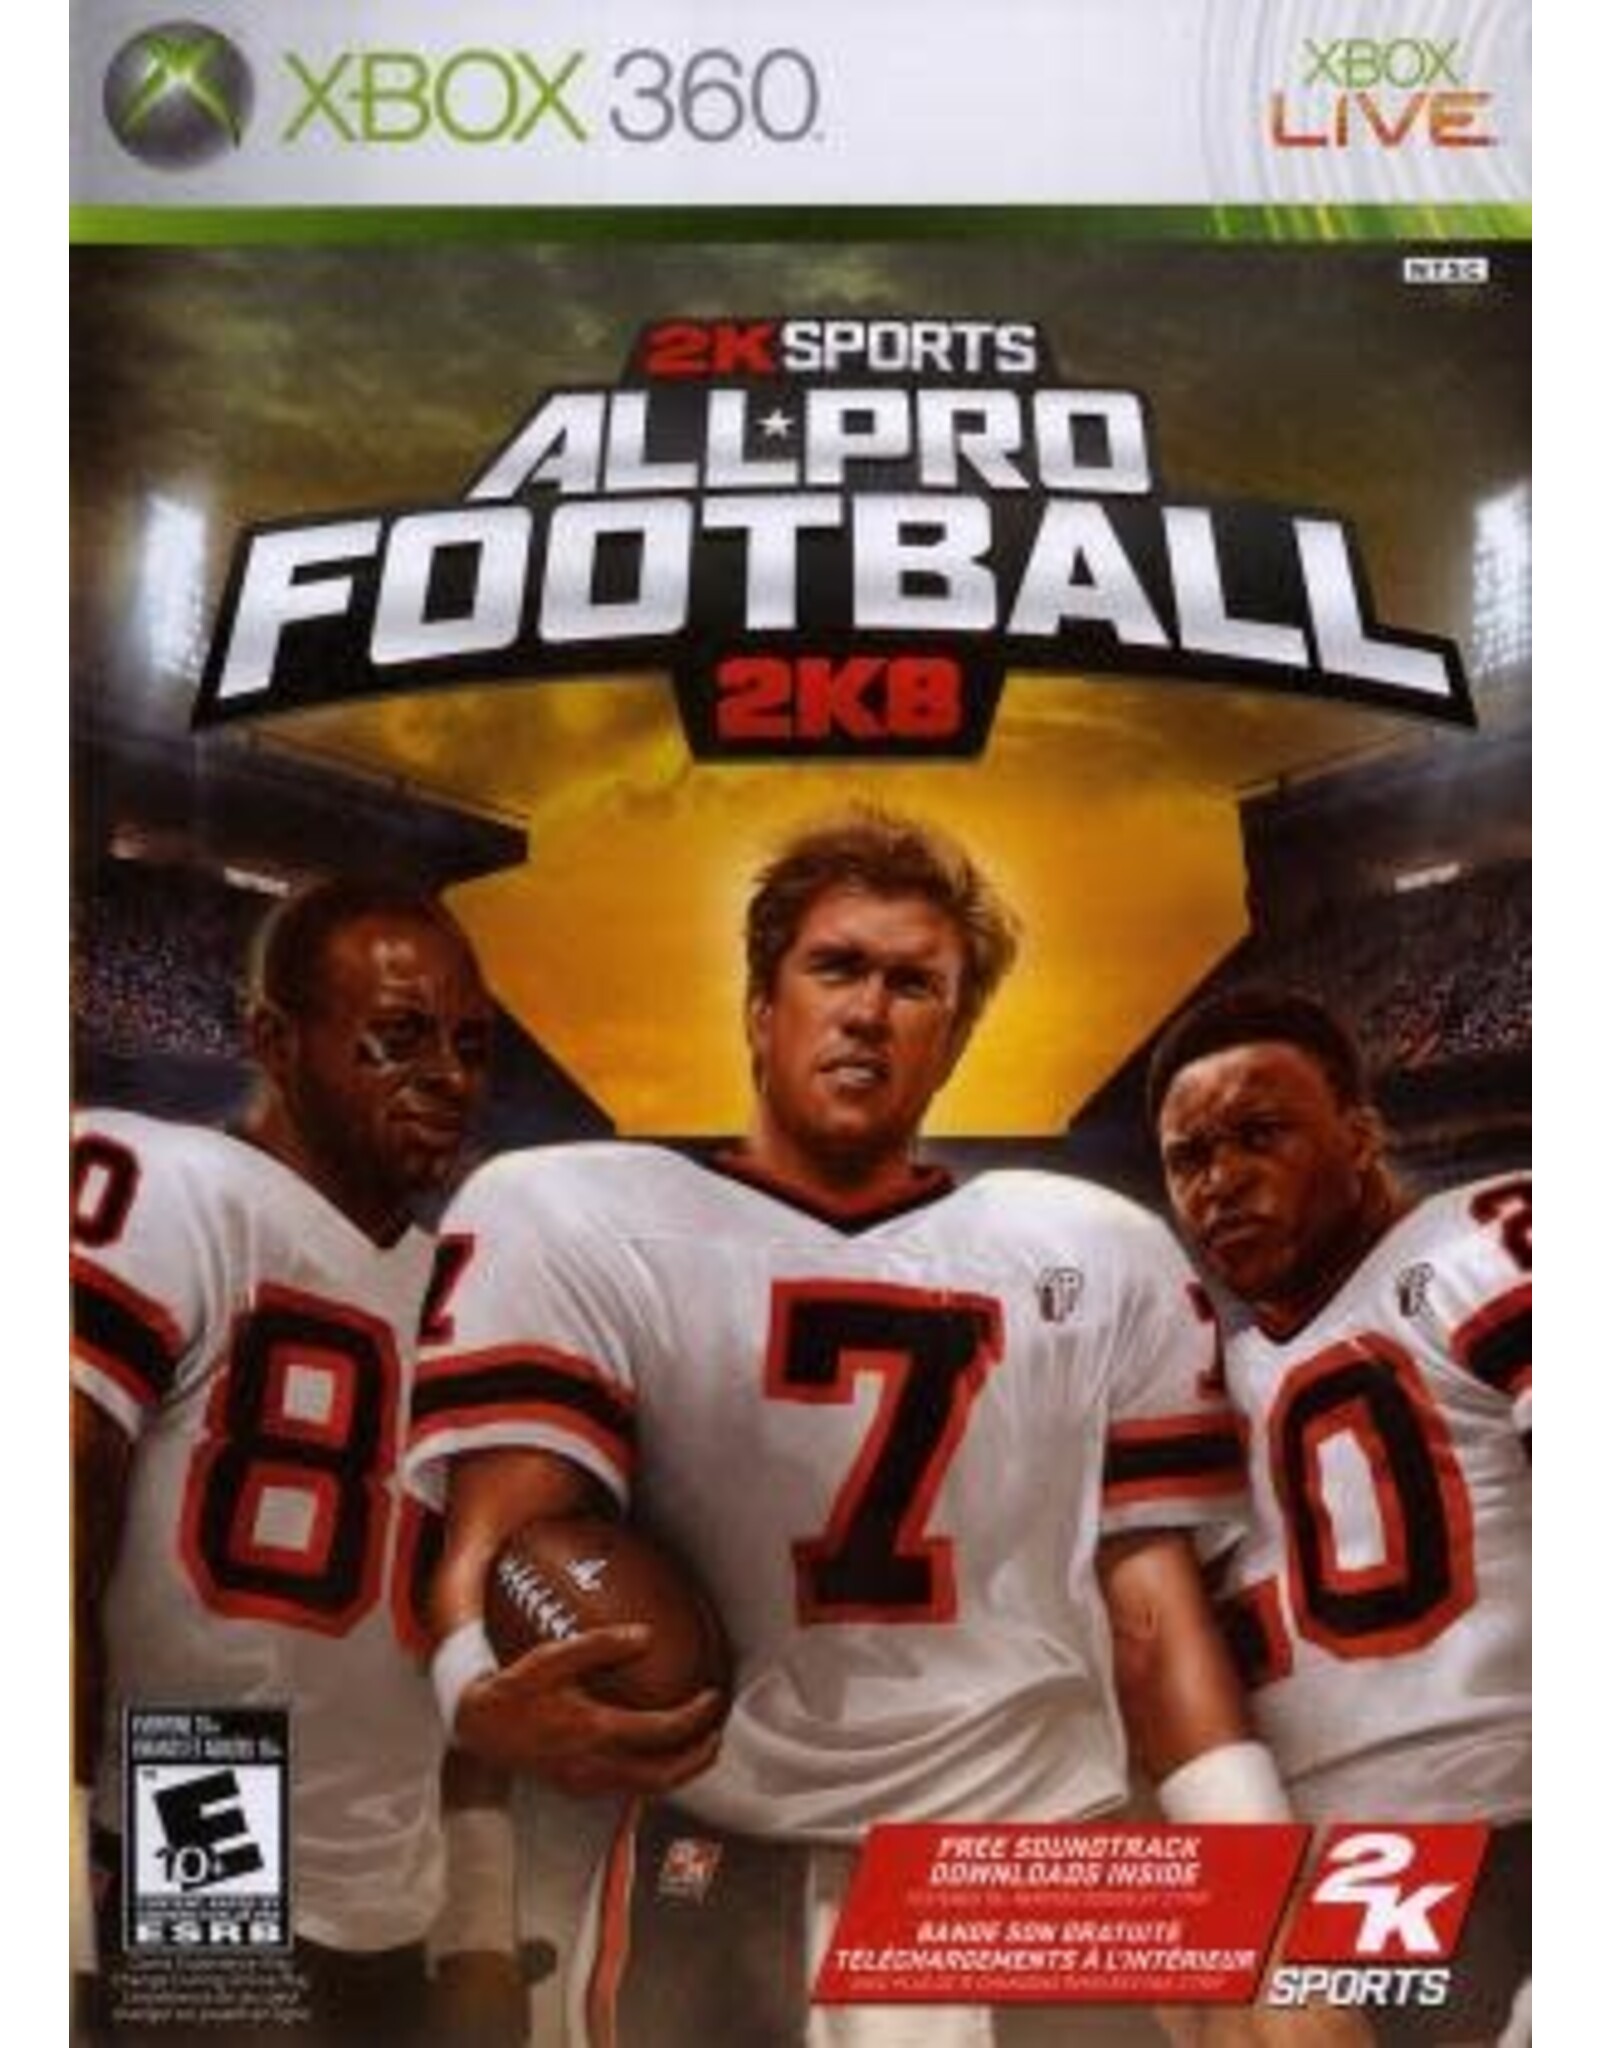 Xbox 360 All Pro Football 2K8 (No Manual, Damaged Sleeve)